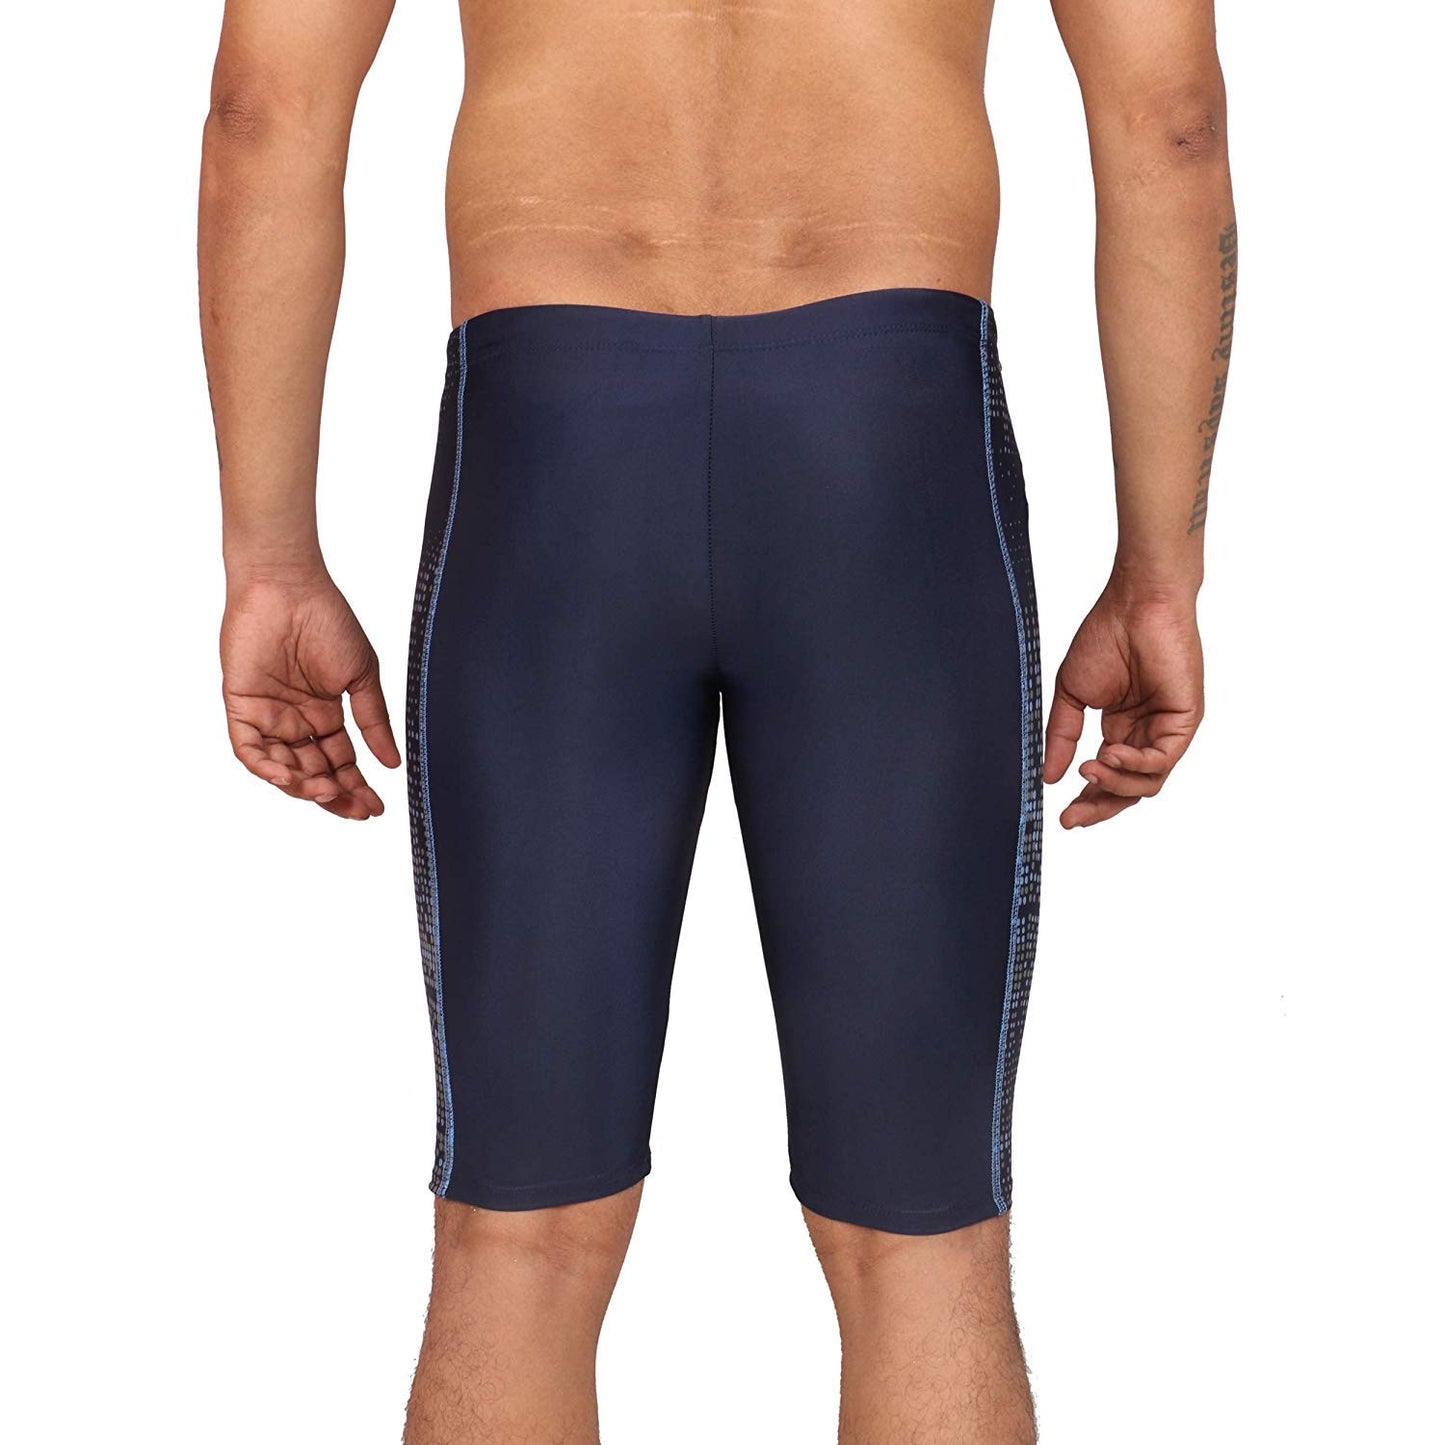 Sports Swimwear Swimming Shorts Jammer for Men, Dark Navy - Best Price online Prokicksports.com